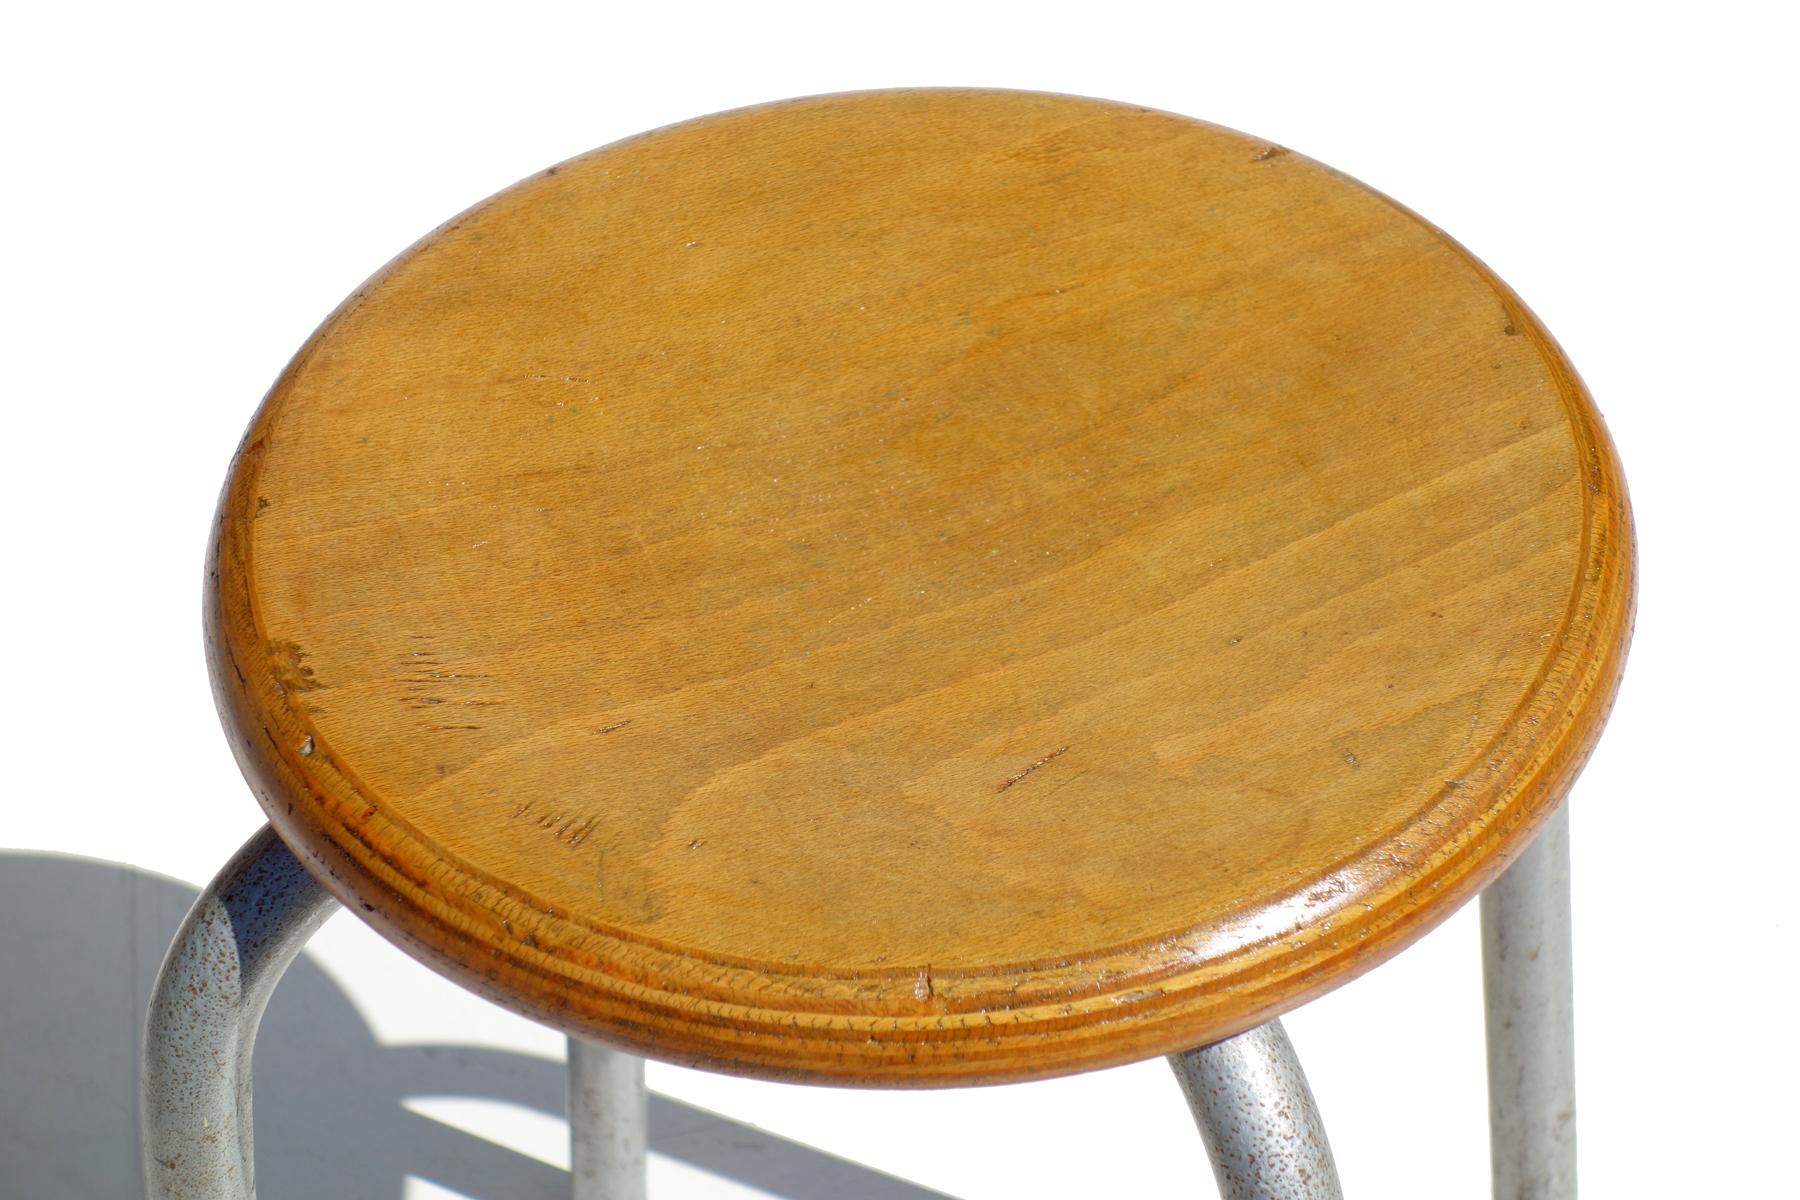 Beech plywood, metal tubolar, rubber
Very good condition
Measure: Diameter seat: 31 cm.